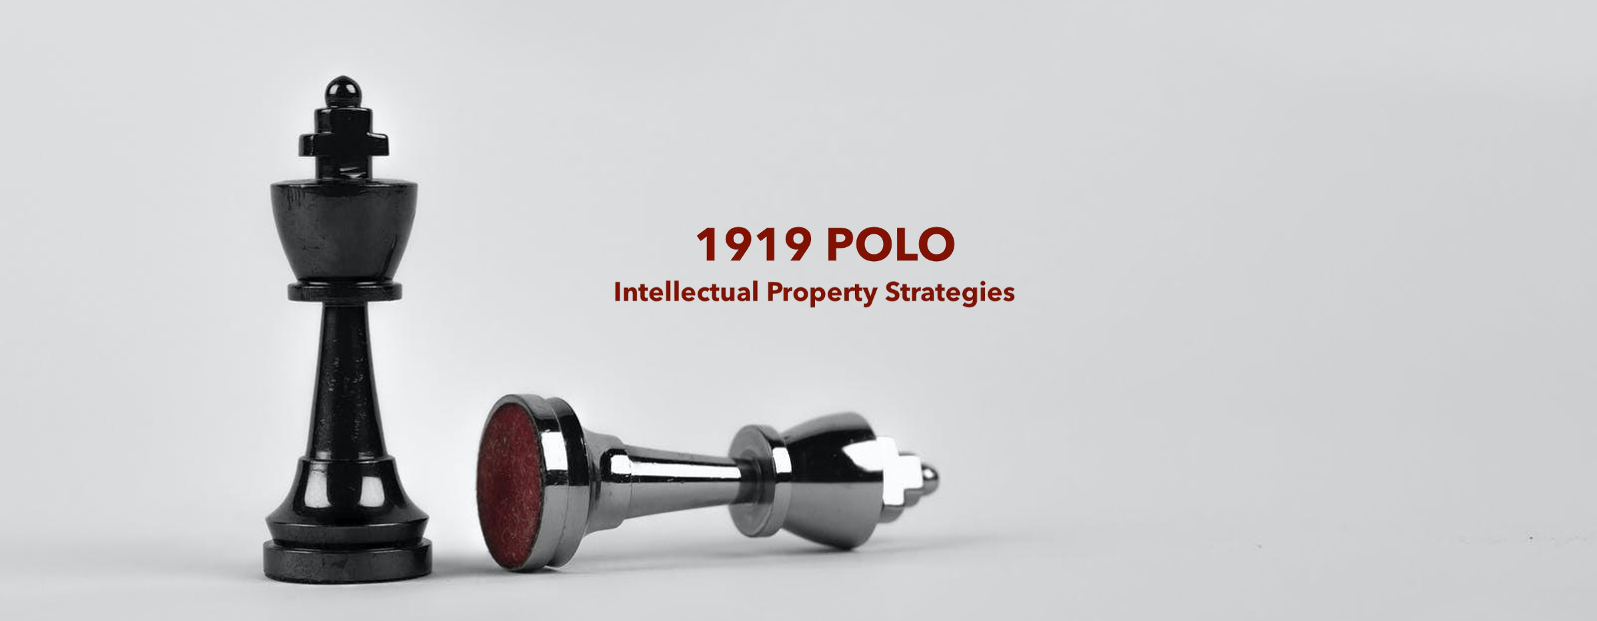 1919 Polo - Intellectual Property Strategies